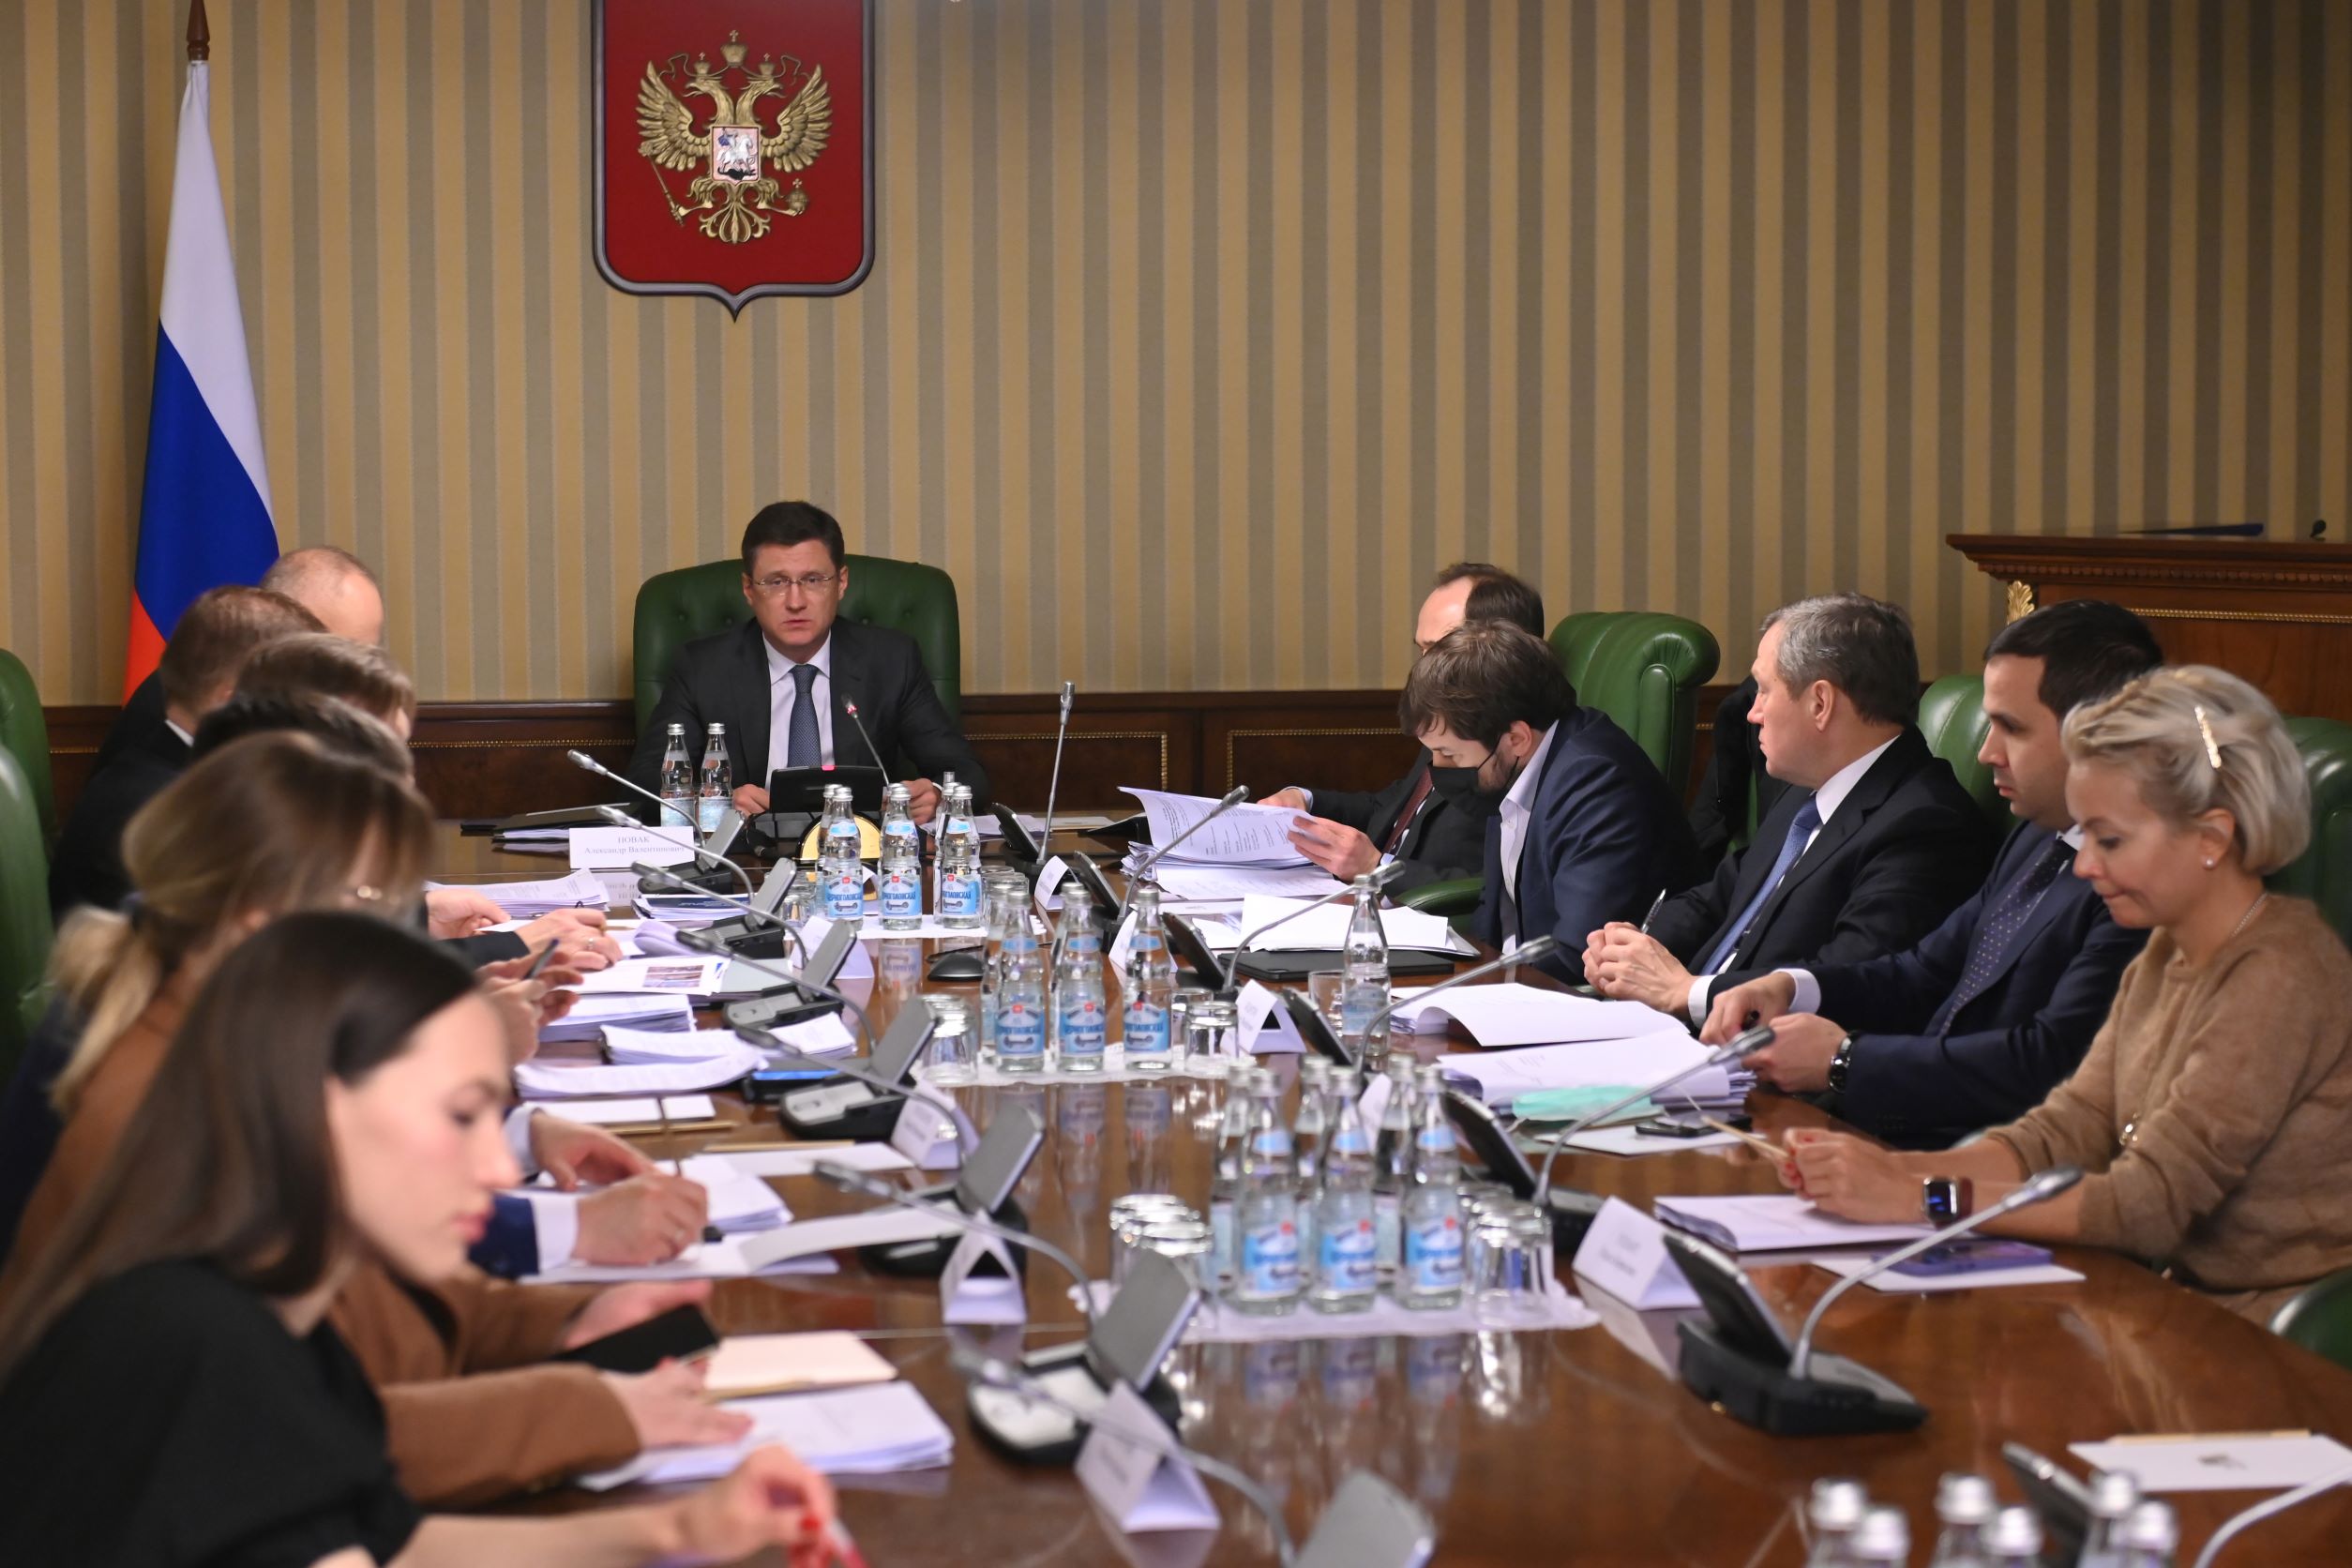 Deputy Prime Minister Alexander Novak hosts the 25th World Energy Congress Organizing Committee Meeting